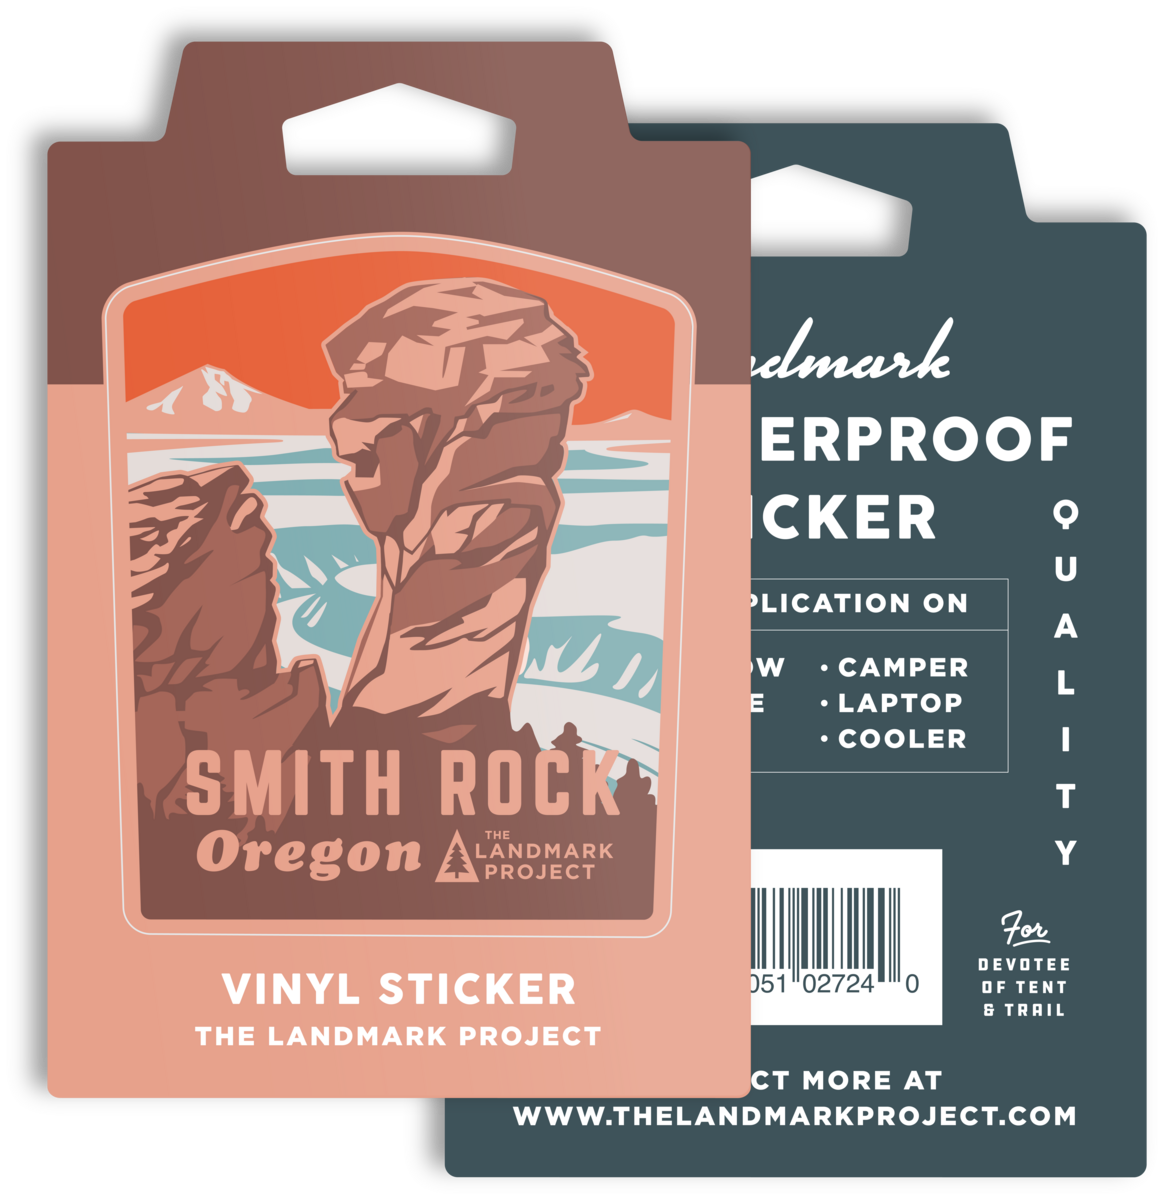 Smith Rock State Park Sticker